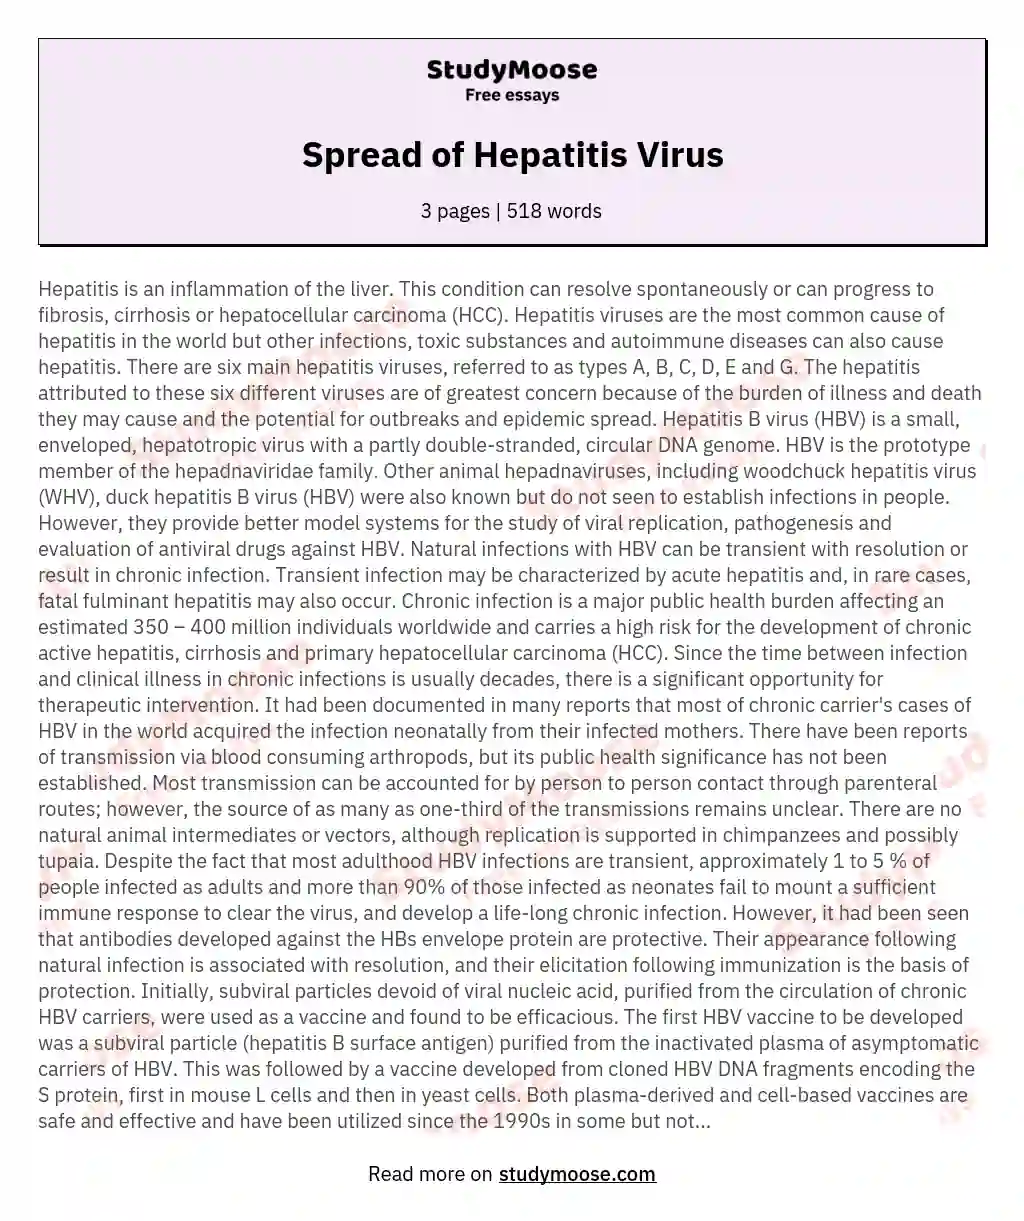 Spread of Hepatitis Virus essay